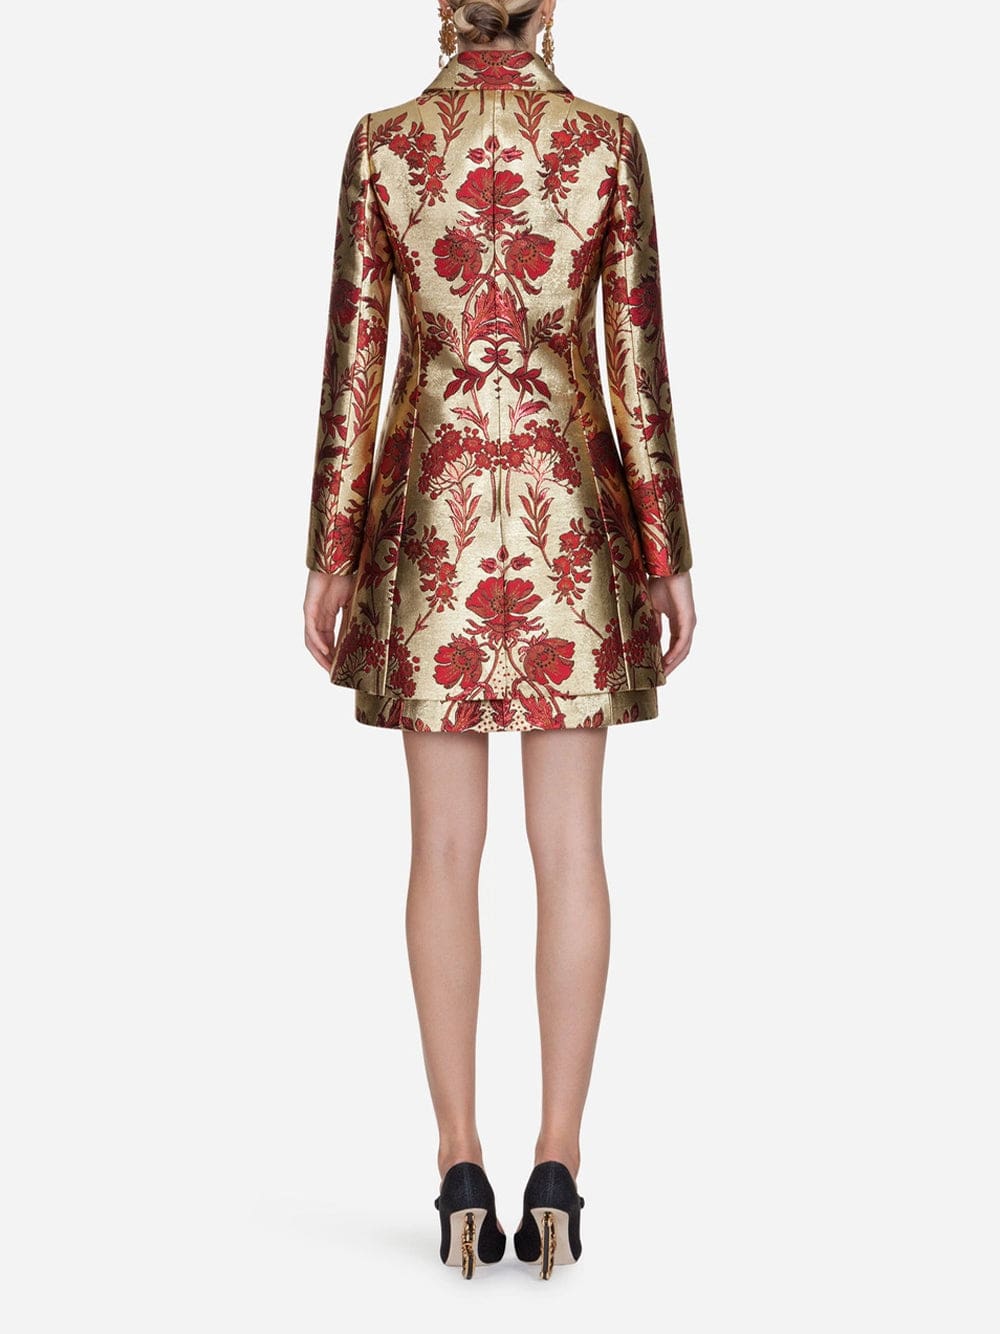 Dolce & Gabbana Metallic Floral-Jacquard Coat